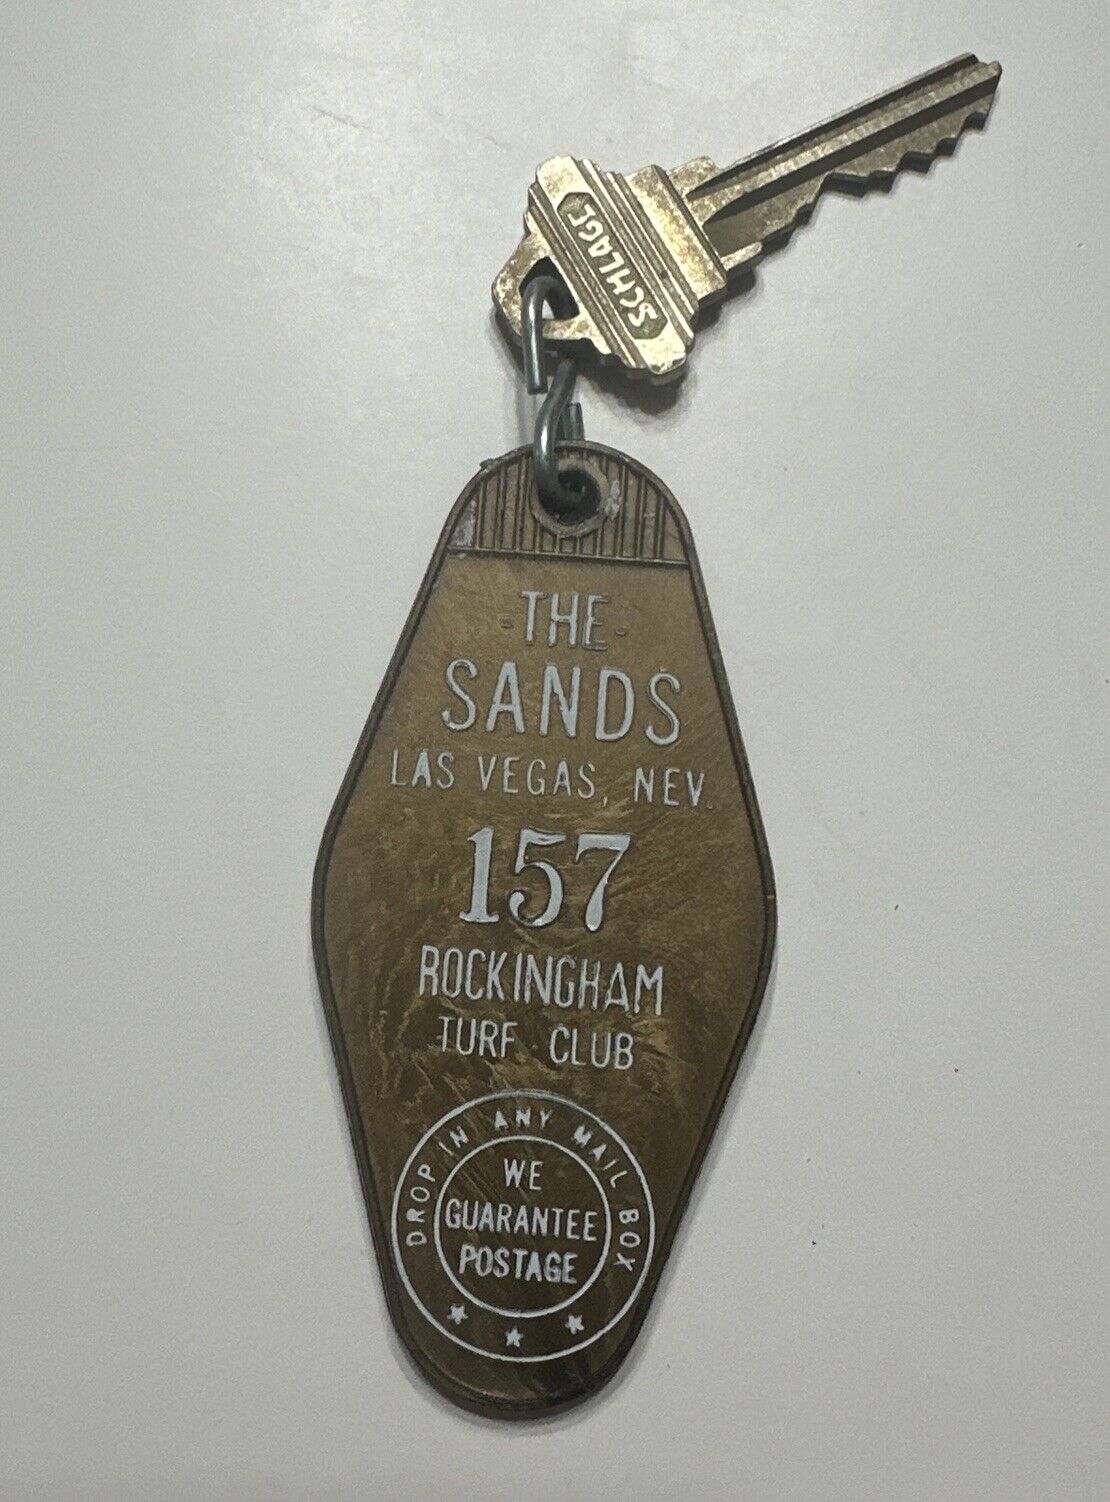 Vintage The Sands Hotel Room Key And Fob. Rockingham Turf Club Las Vegas